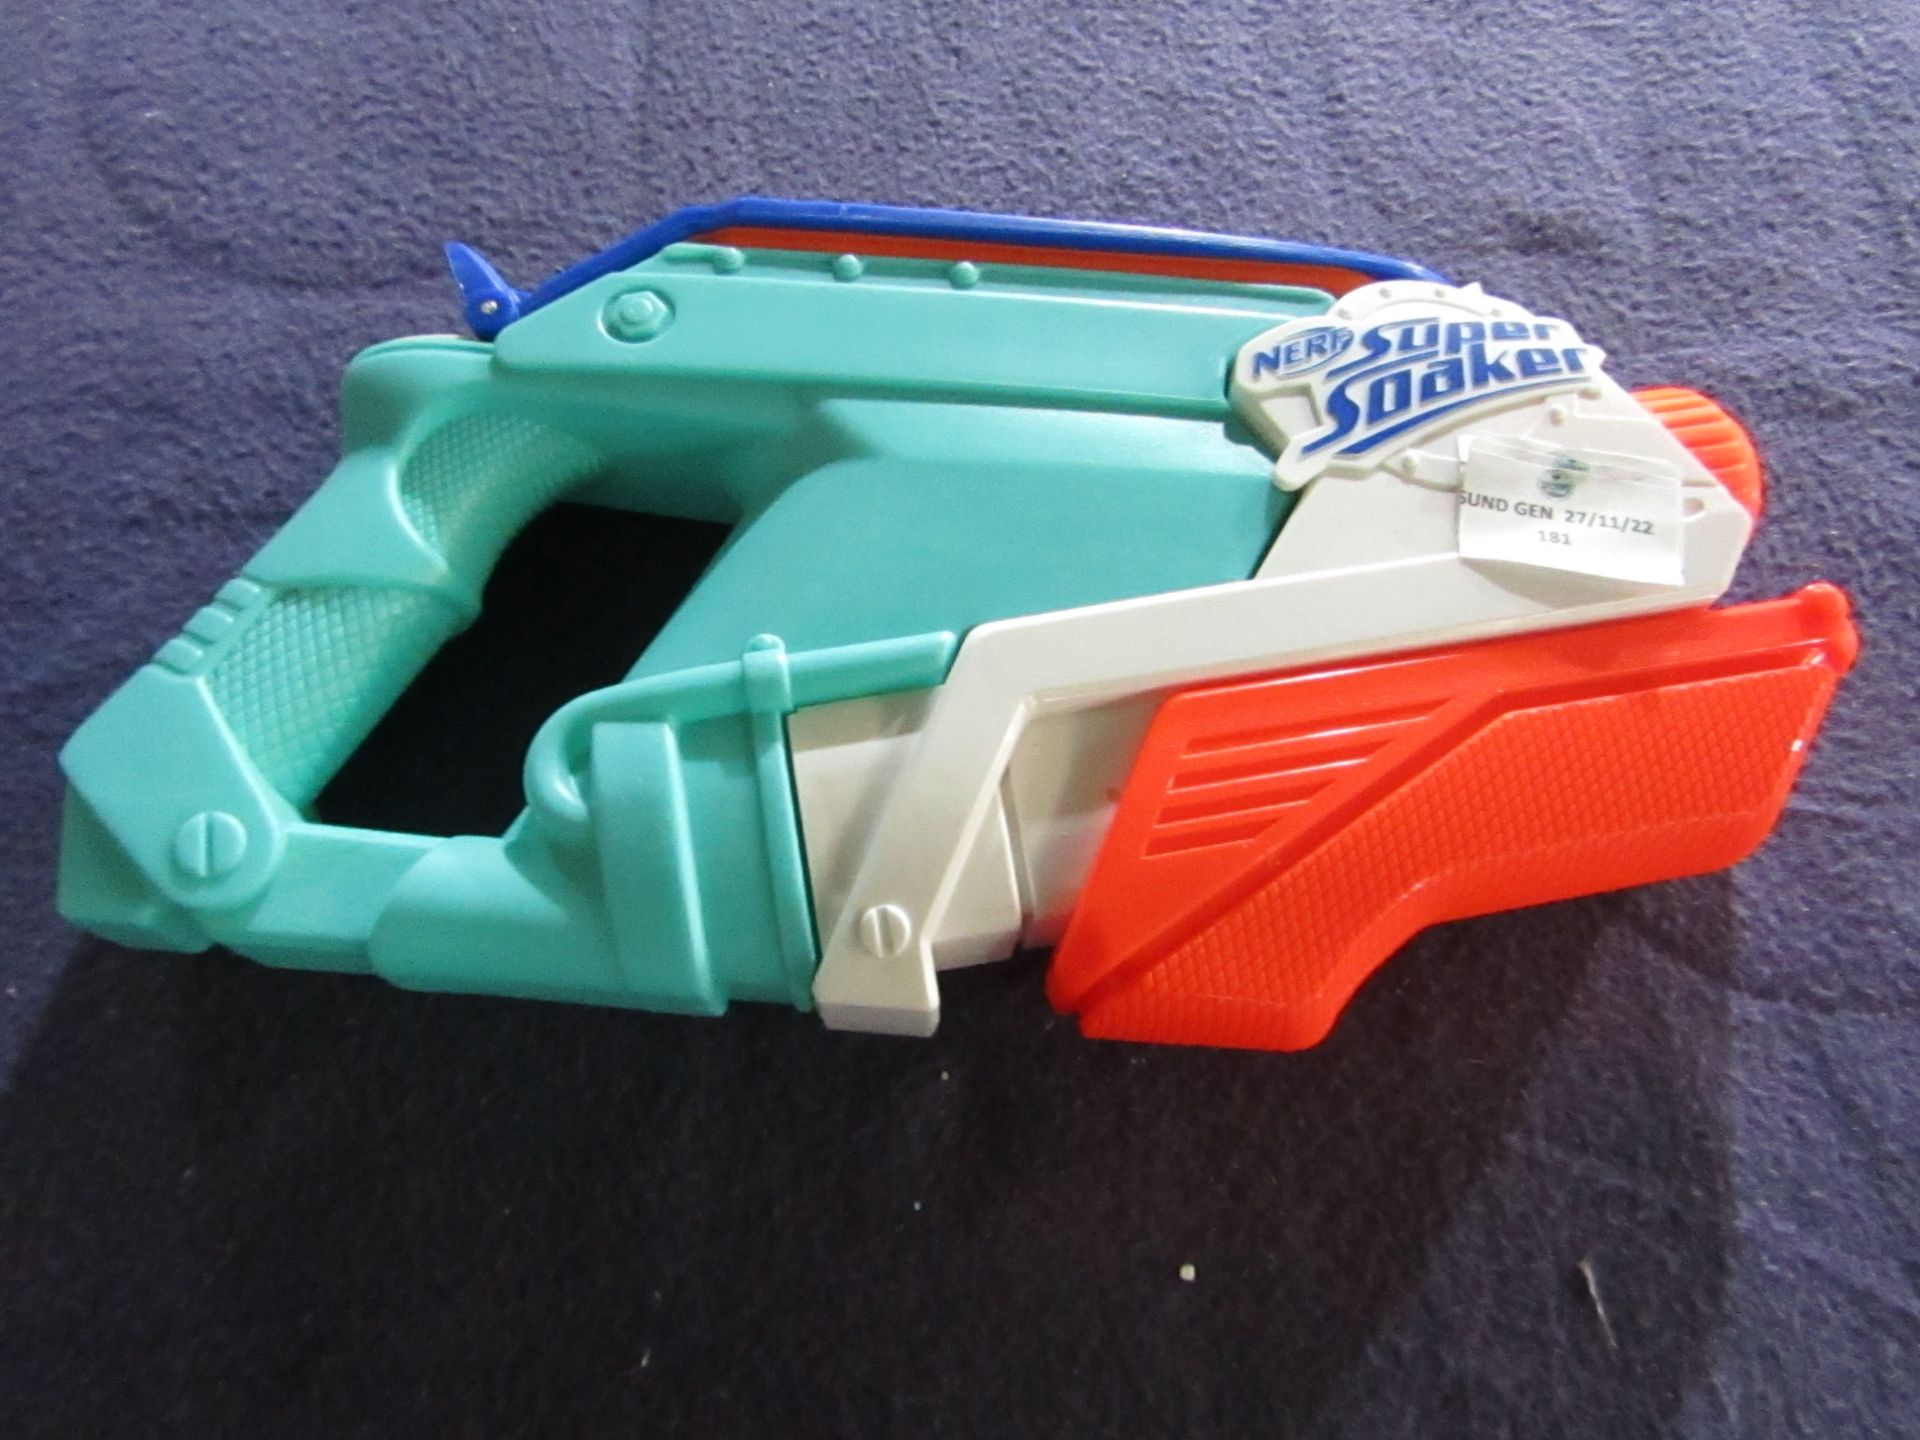 Nerf - Super Soaker Water Gun - Untested, Non Original Packaging.